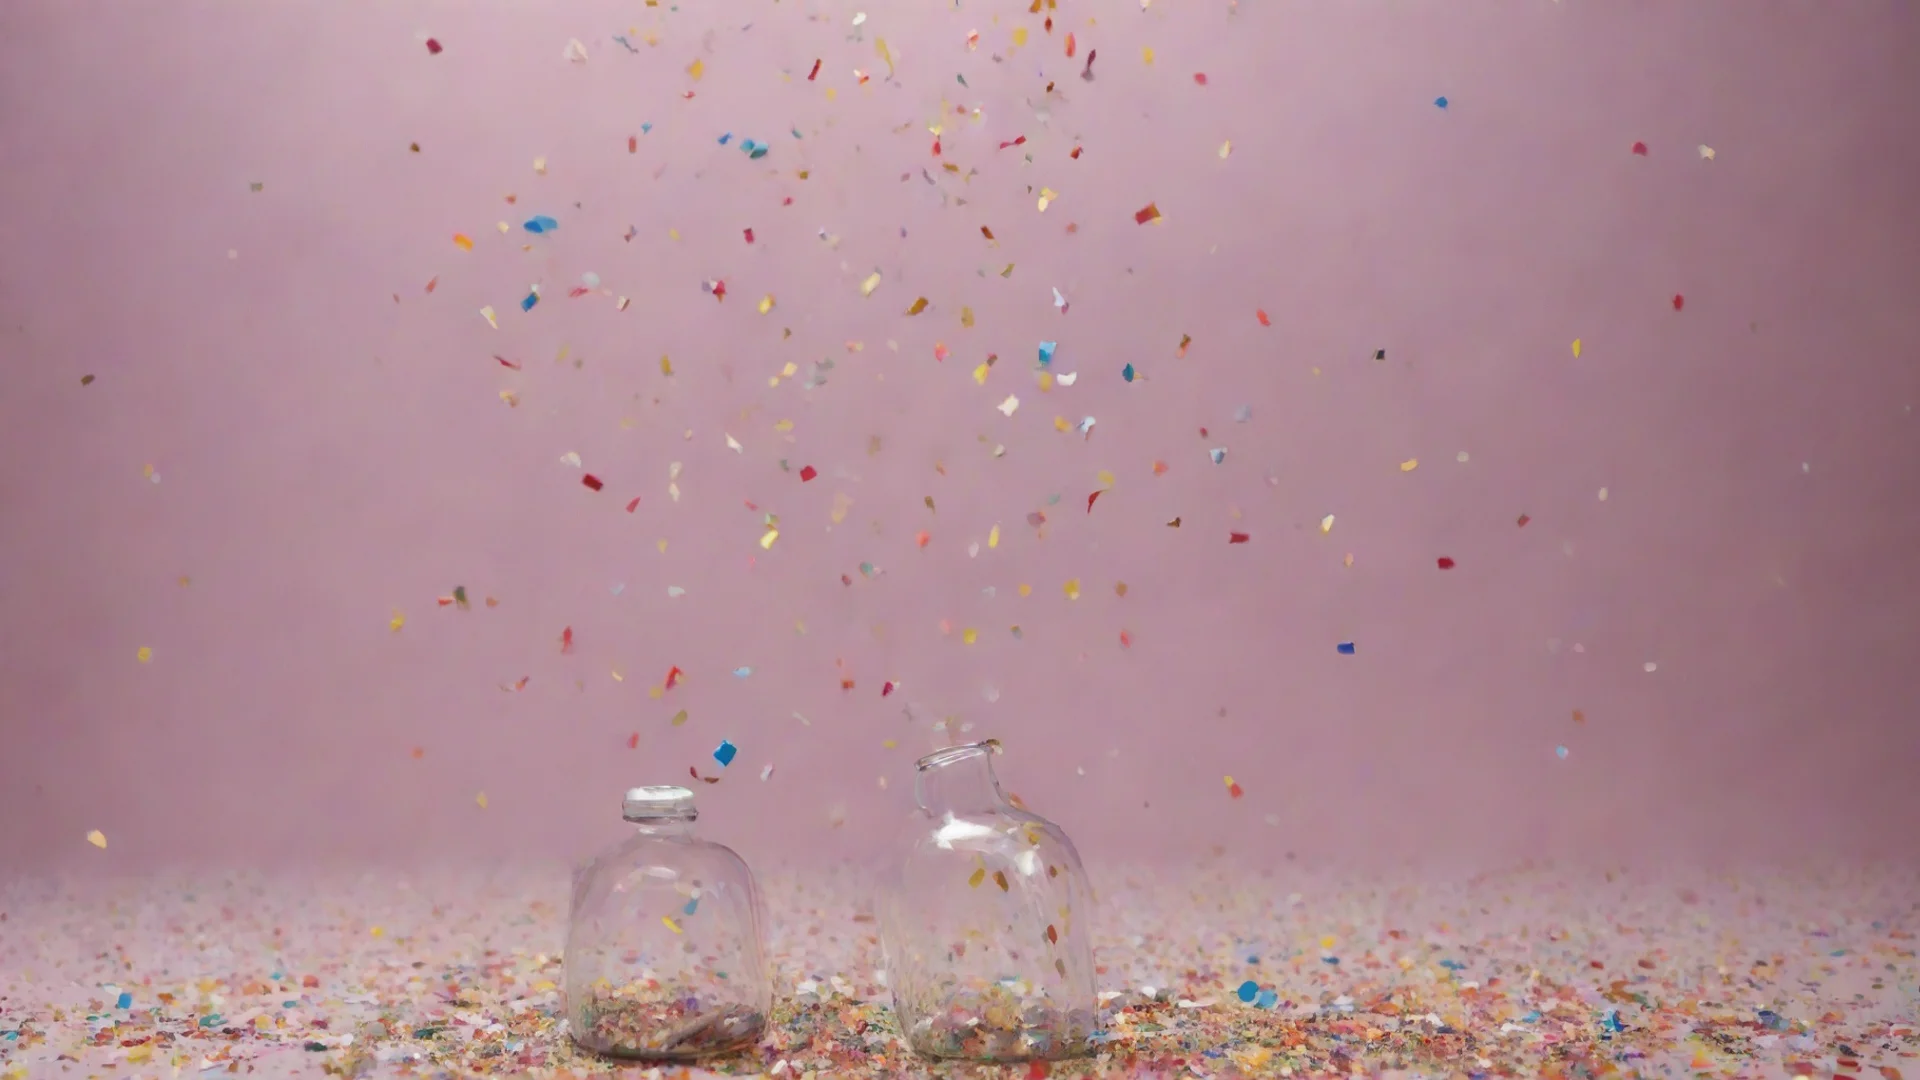 epic lovely artistic wind bottle pop confetti amazing celebration wonderful detailed asthetic wide